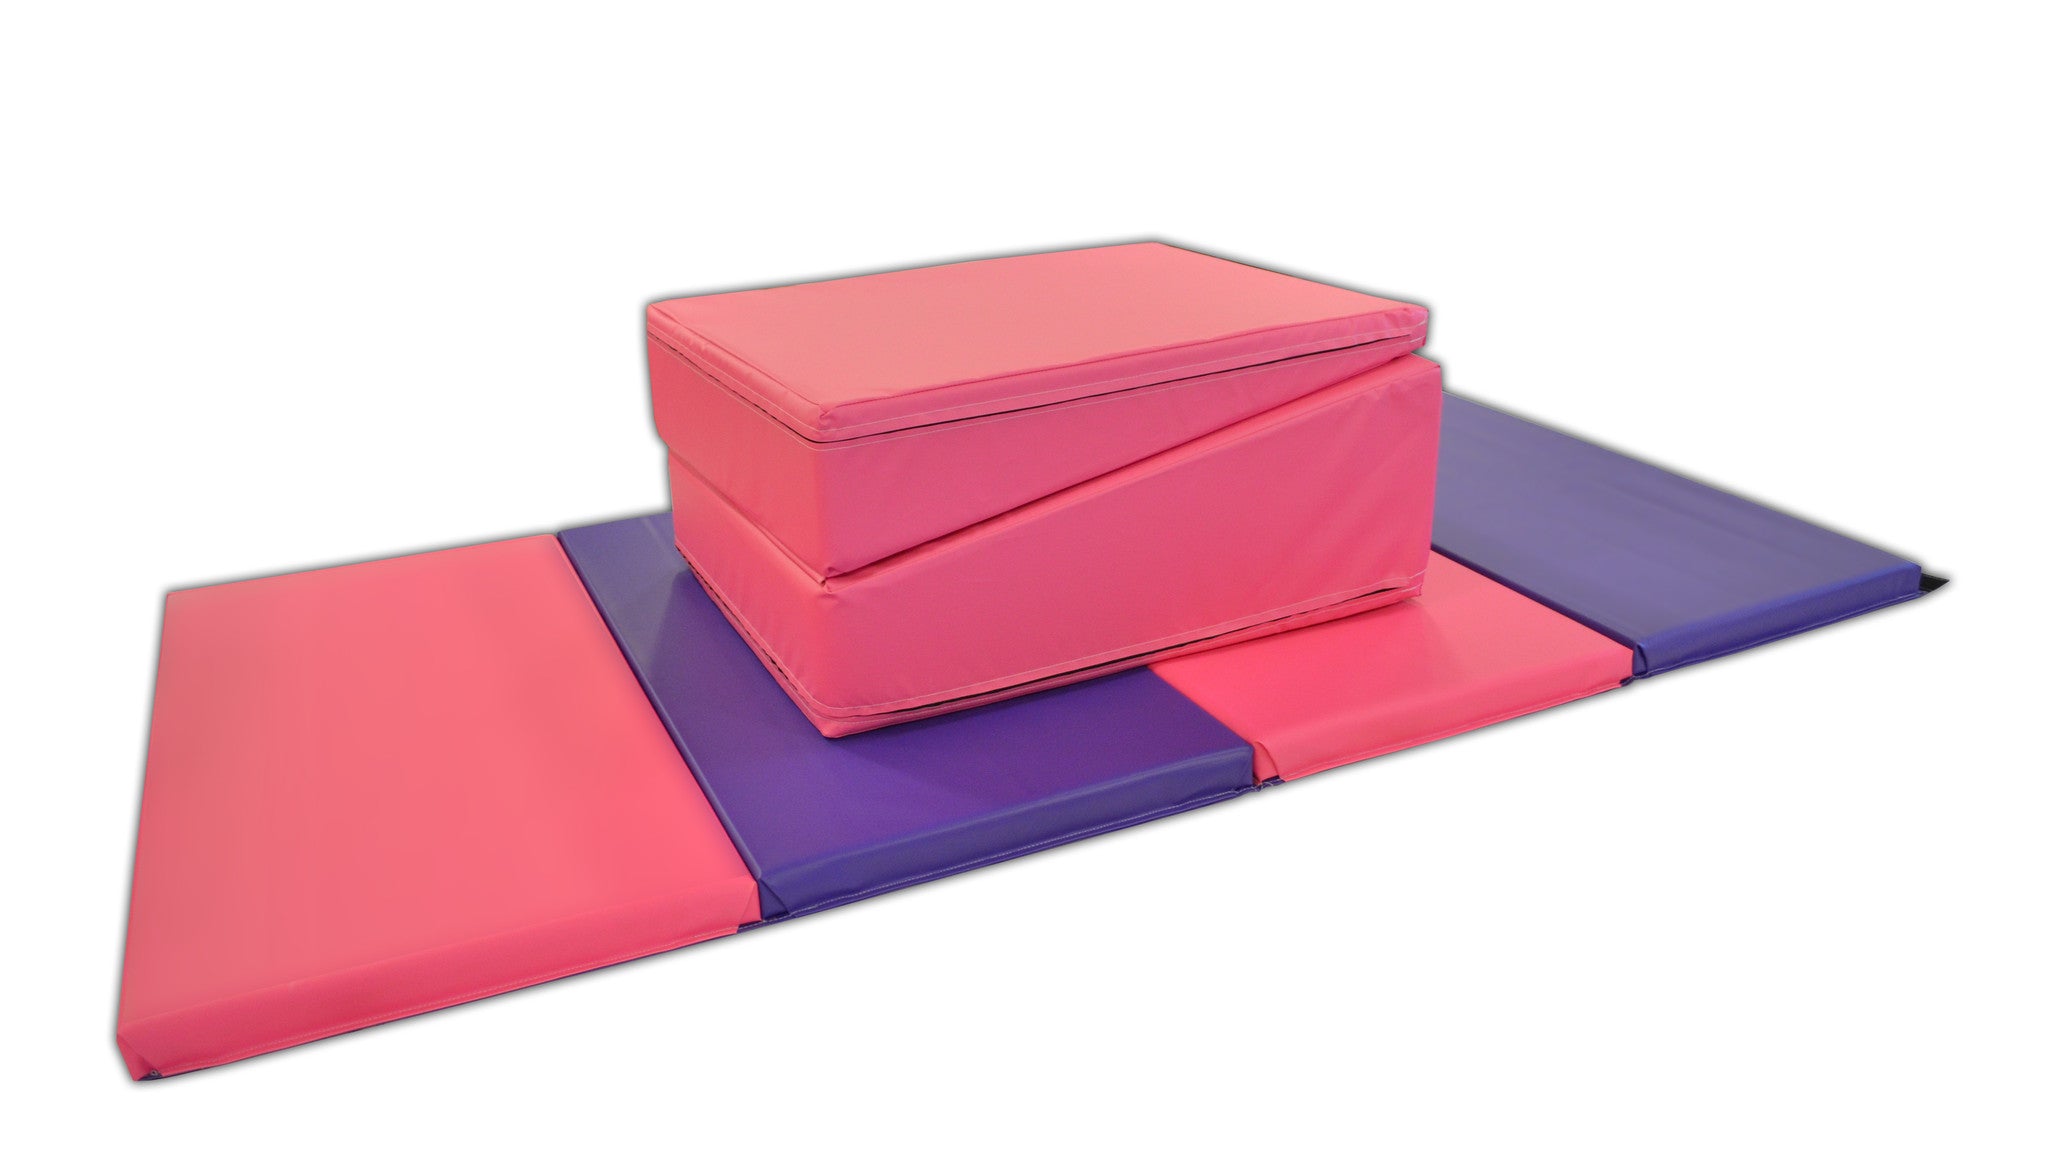 Honey Joy Pink 8 ft. x 4 ft. x 2 in. Folding Gymnastics Mat Four Panels Gym PU Leather EPE Foam (32 Sq. ft.)